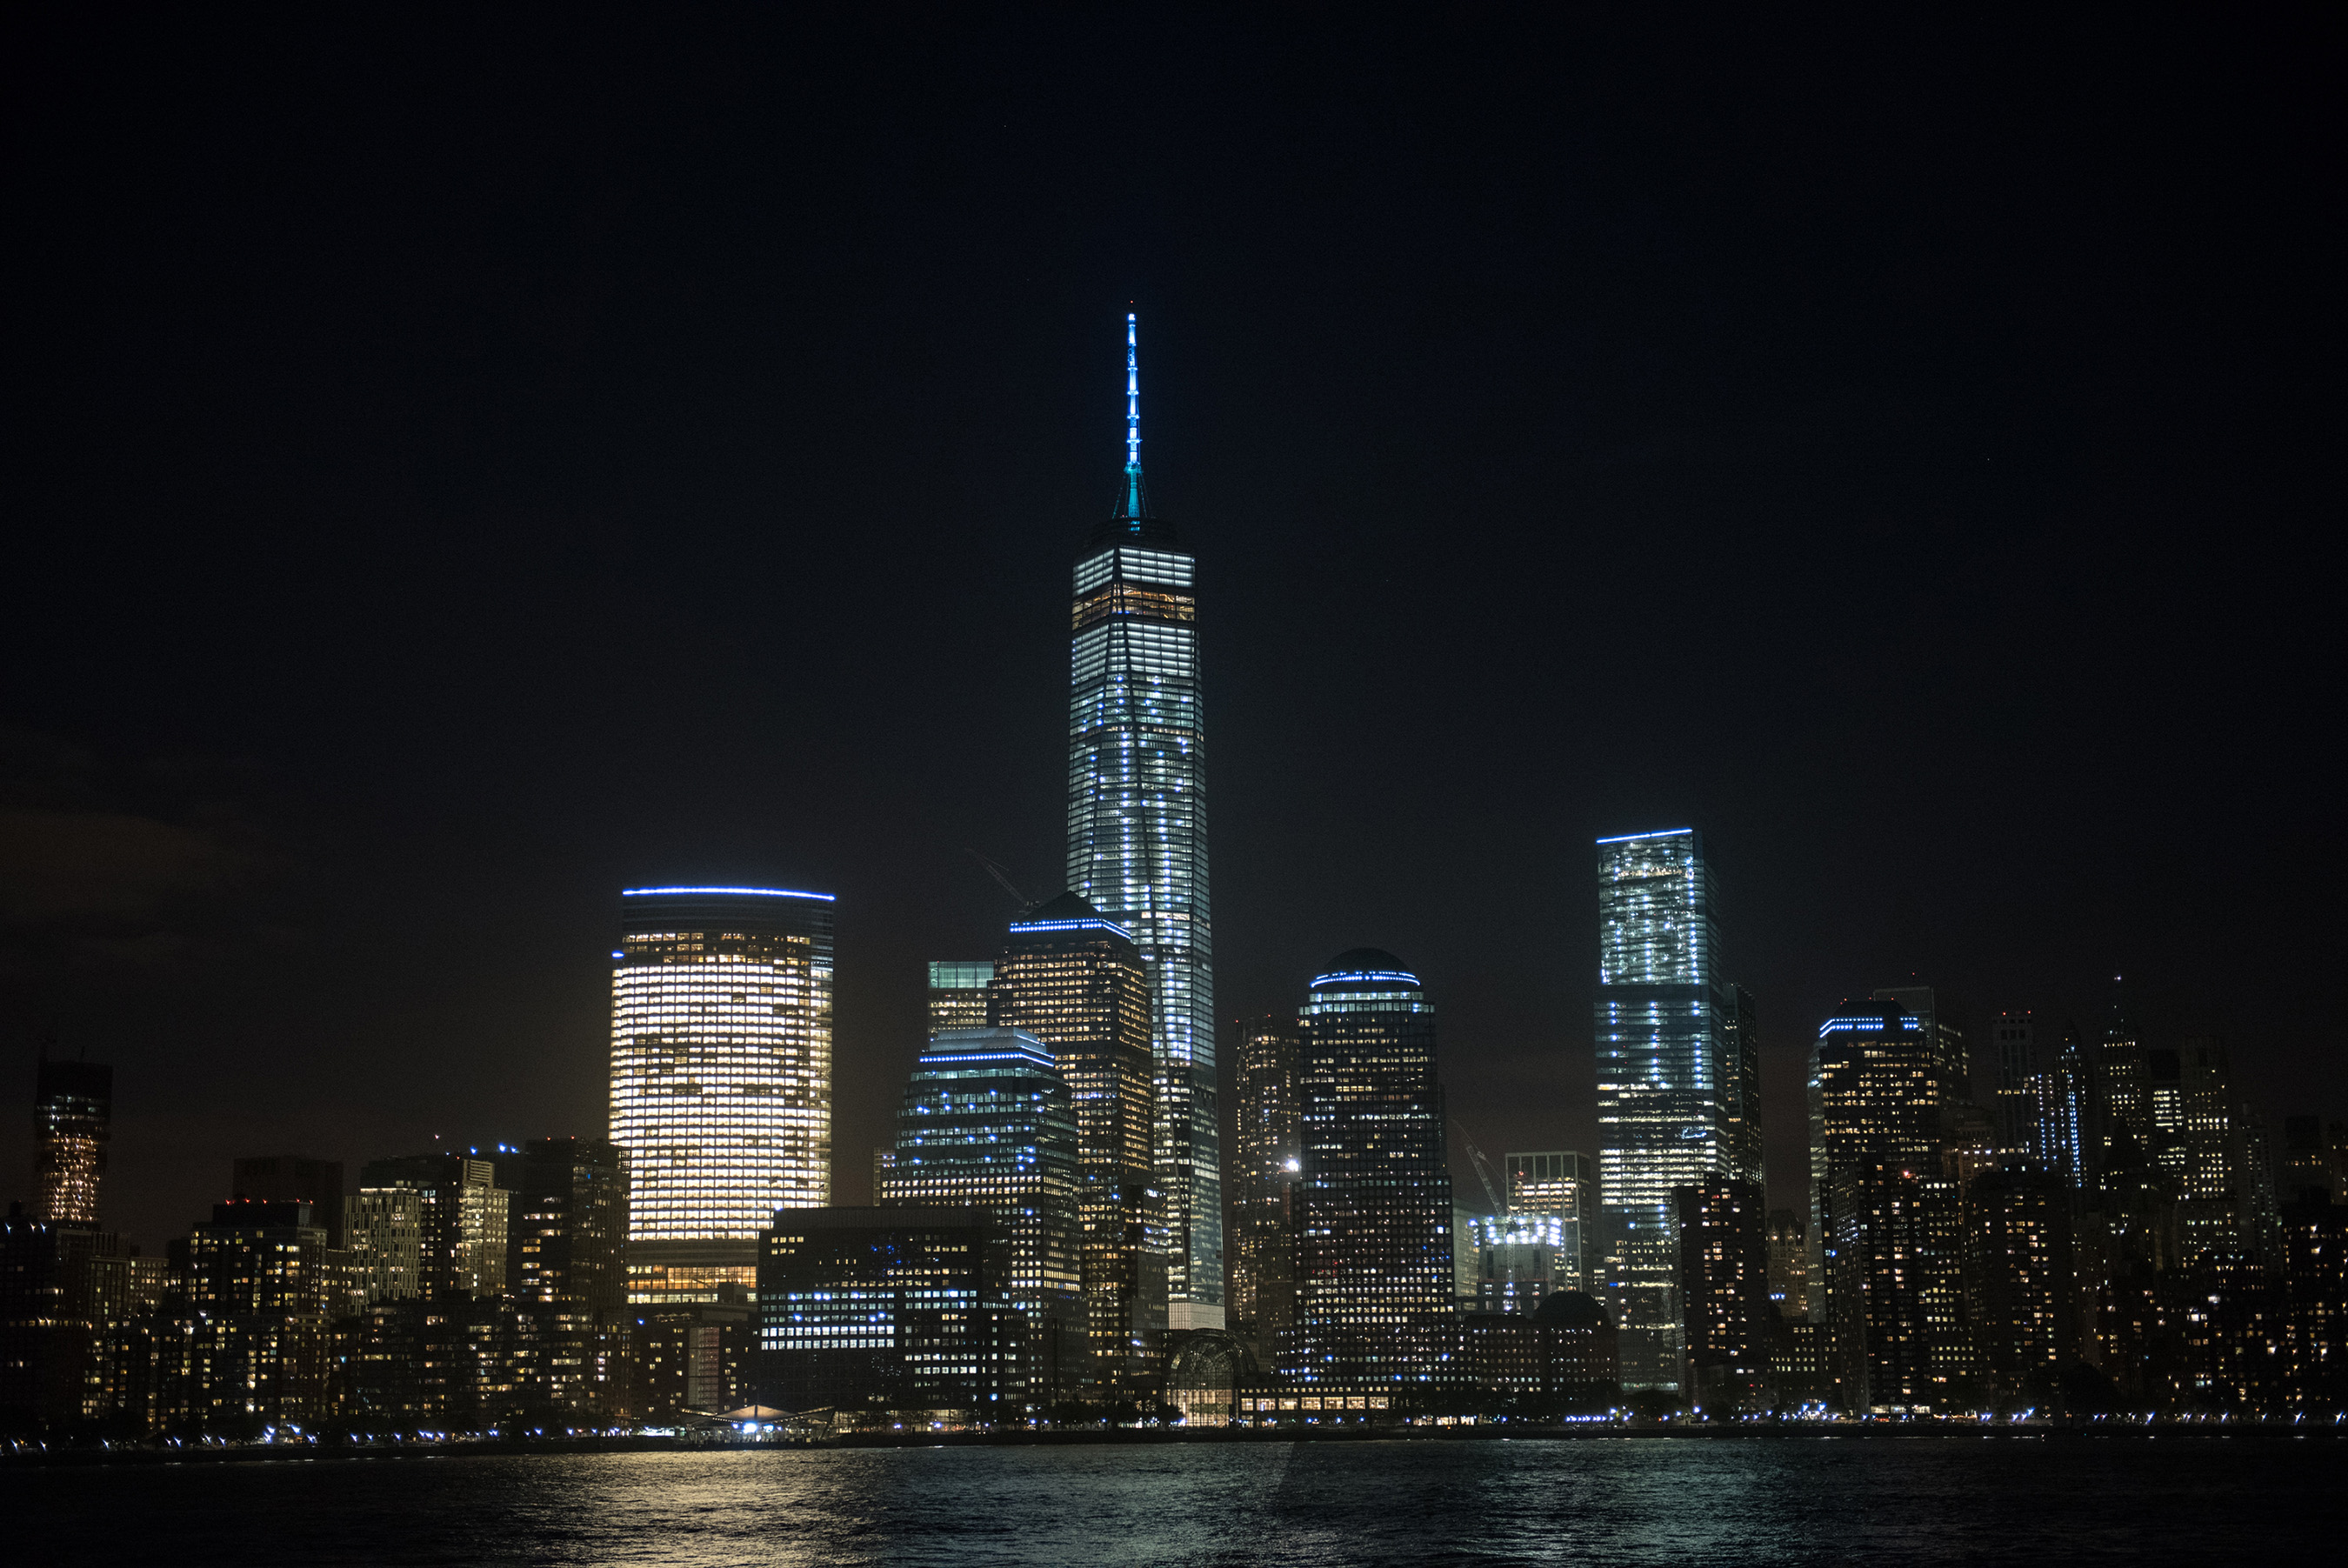 New York City landmark One World Trade Center illuminated turquoise for #LUNGFORCE